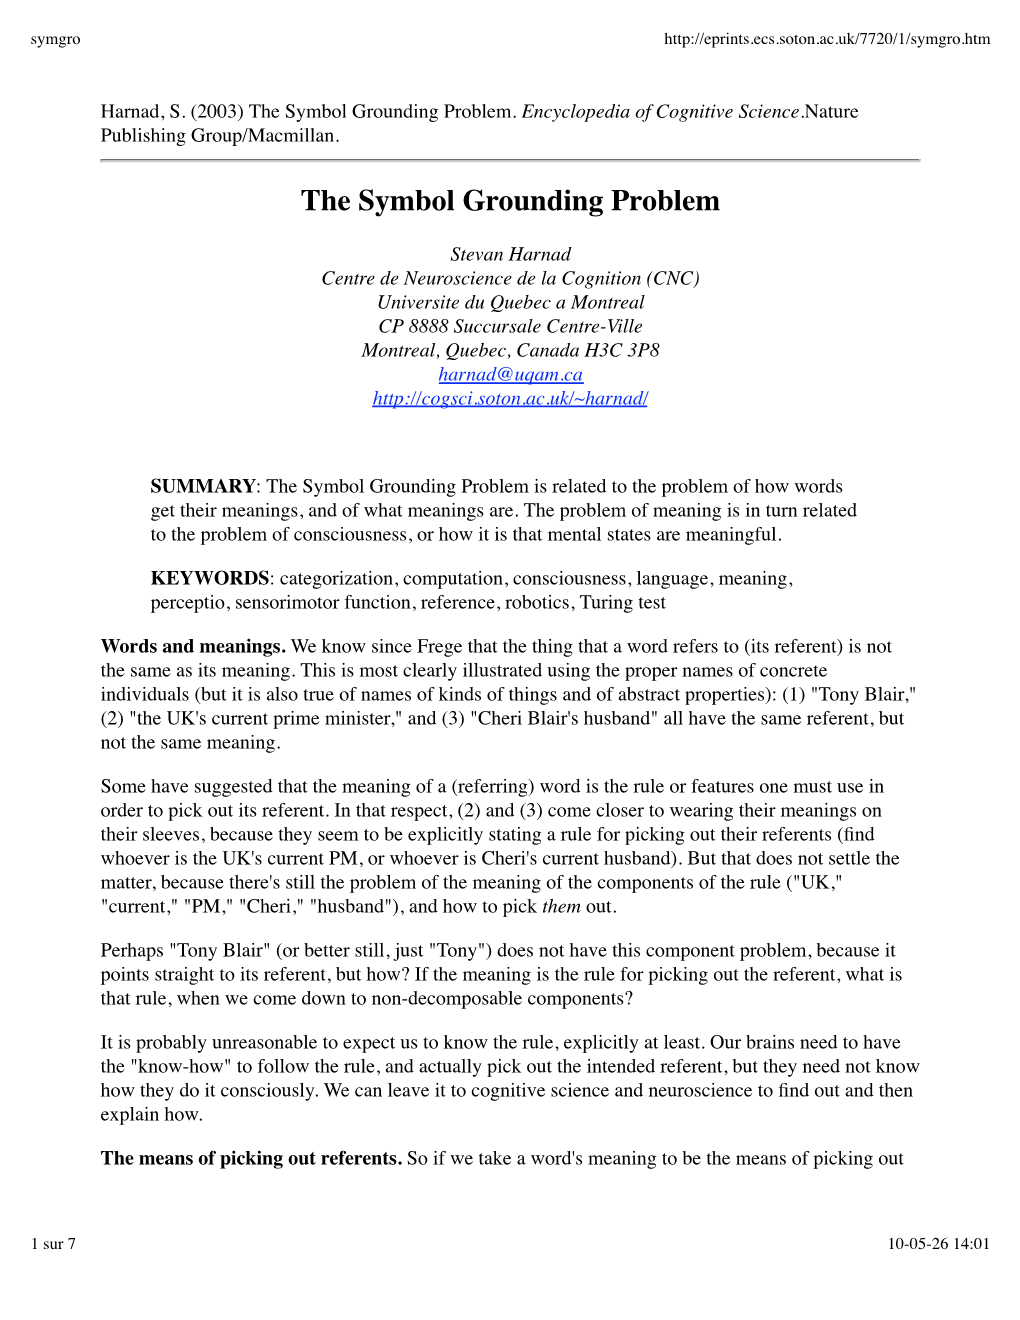 The Symbol Grounding Problem